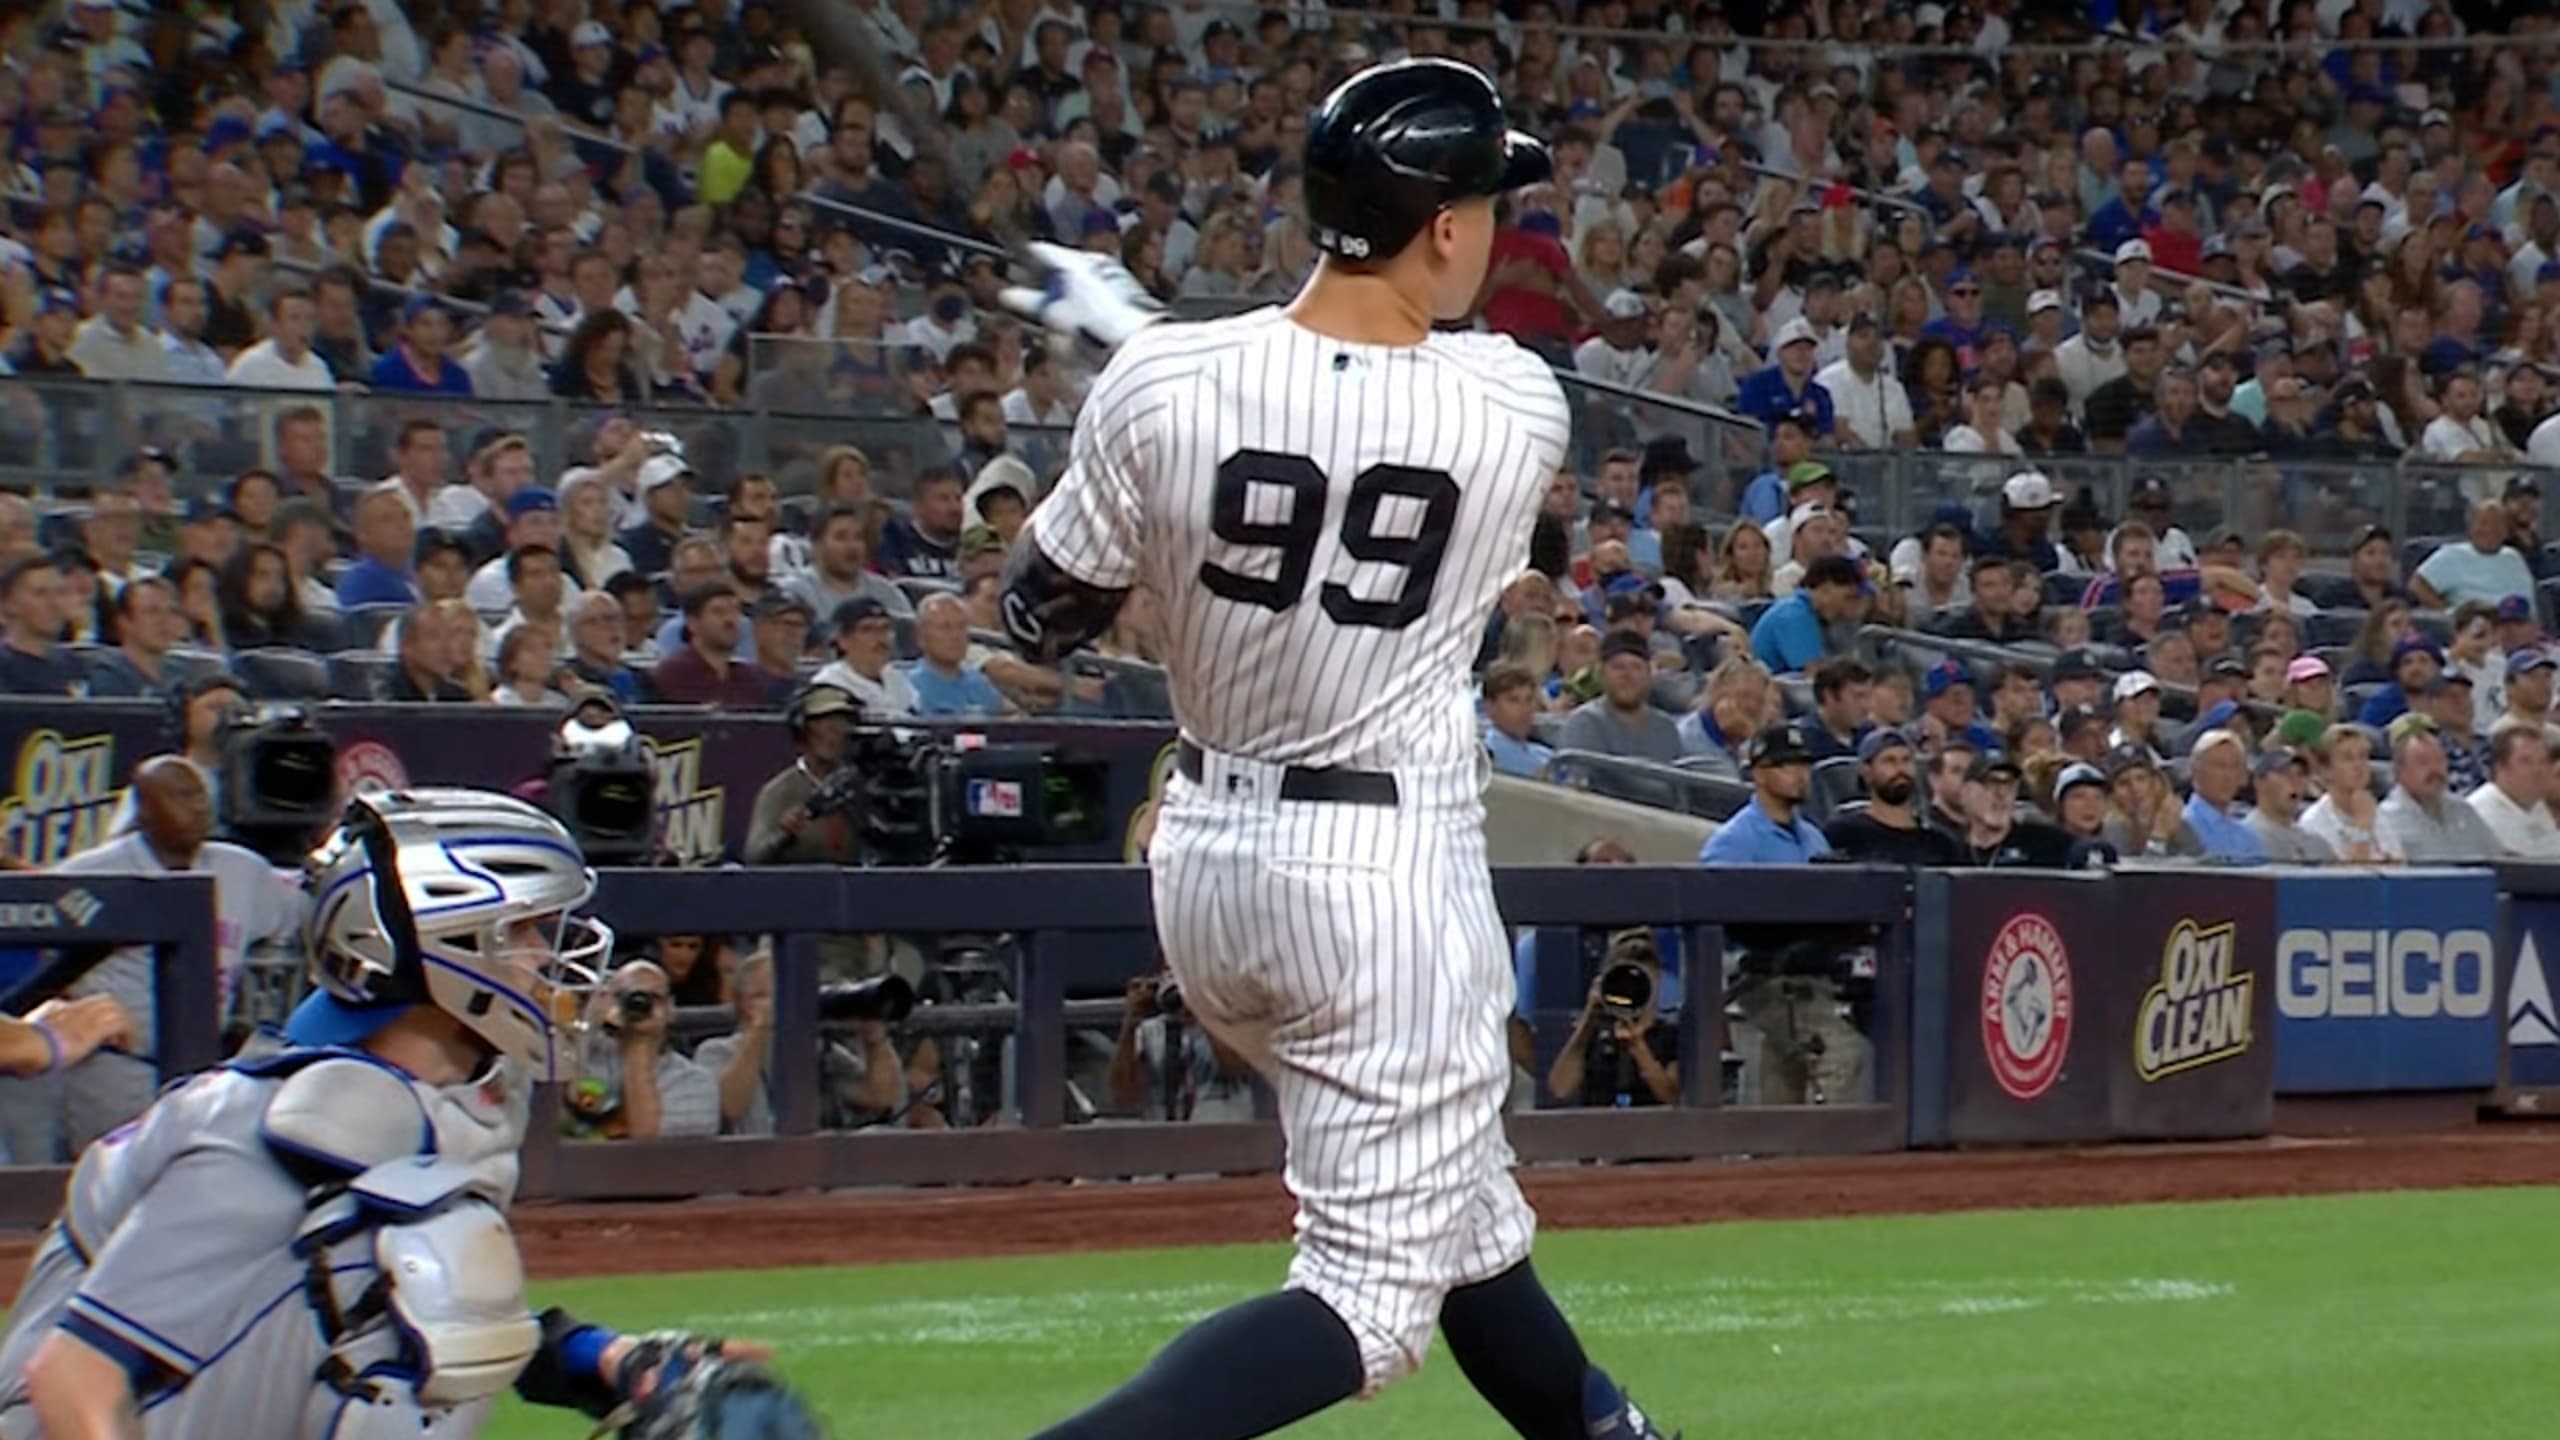 Aaron Judge 48th home run of season, 453-foot blast vs. NY Mets